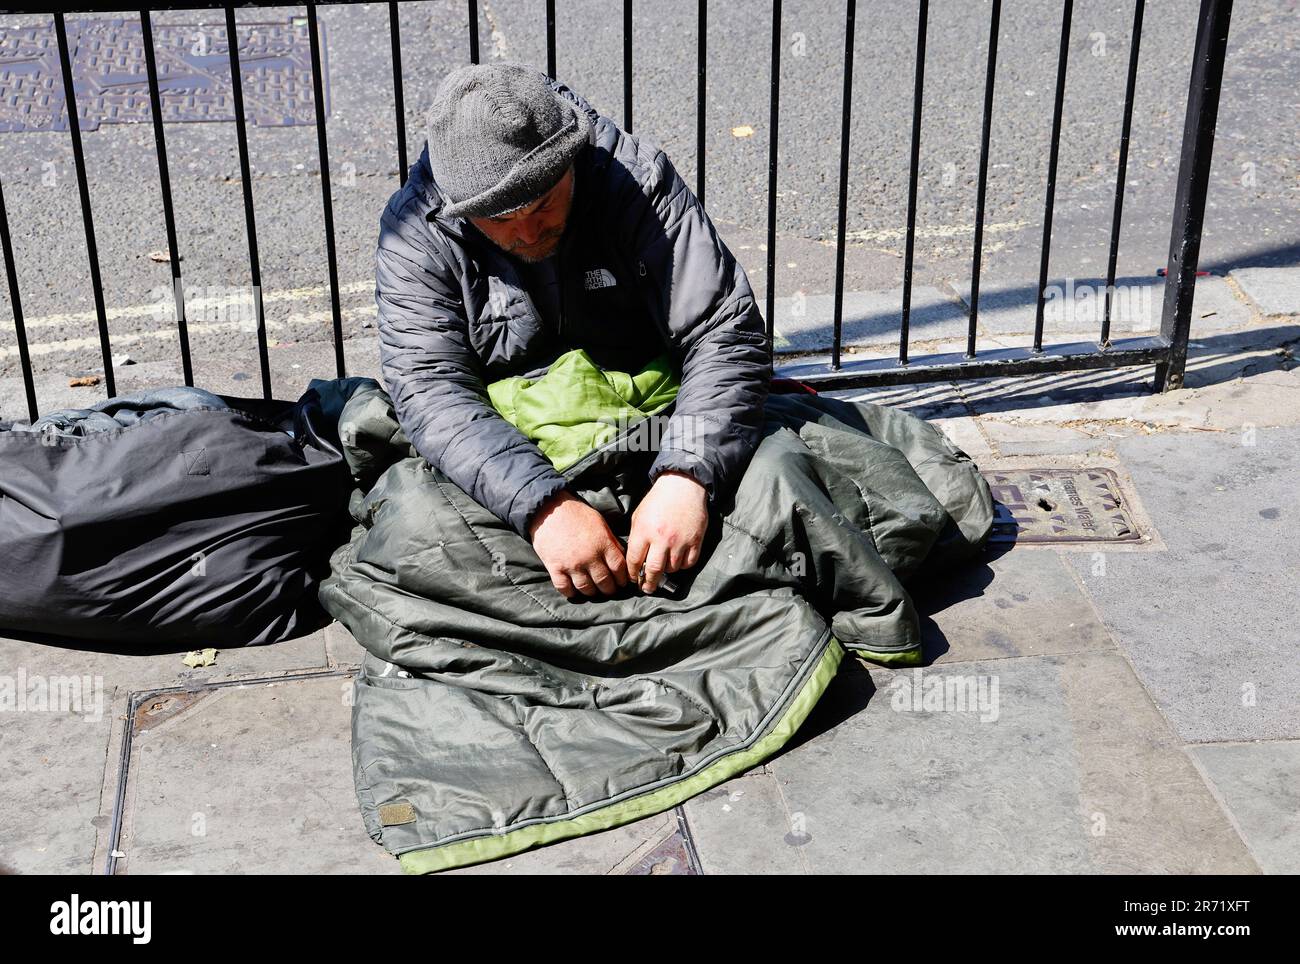 England, London, Trafalgar Square, Homeless man sat on pavement against metal railings. Stock Photo